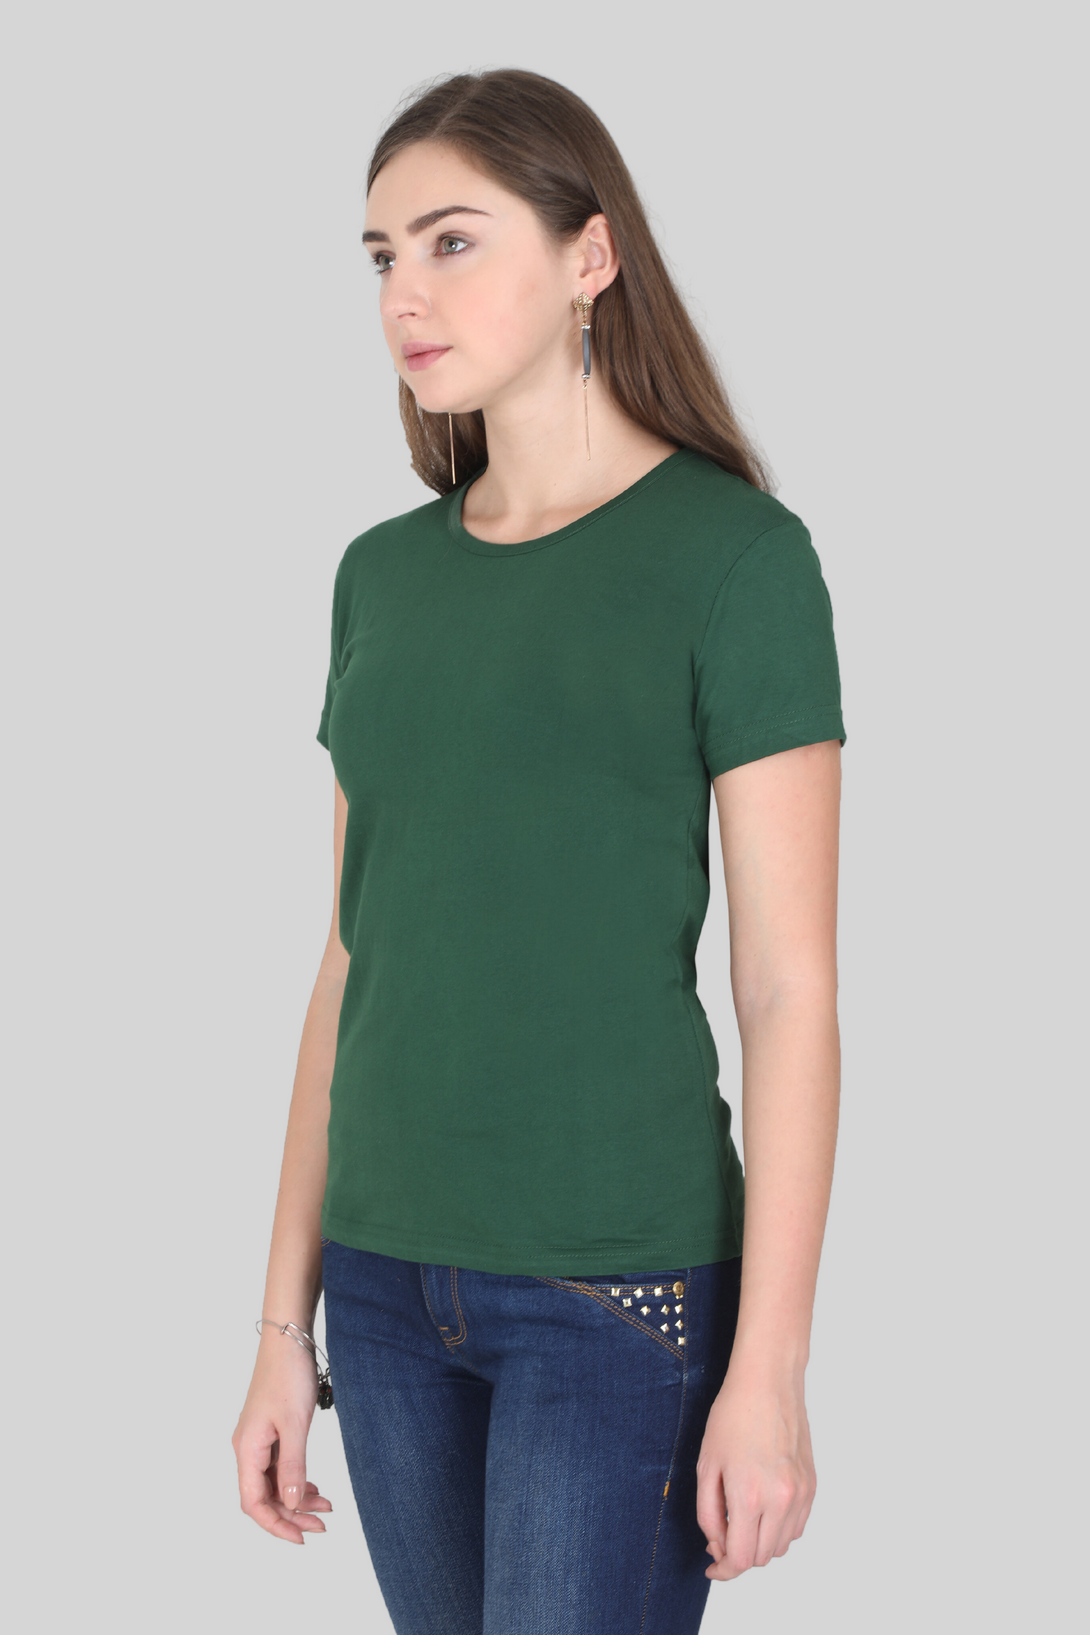 Bottle Green Scoop Neck T-Shirt For Women - WowWaves